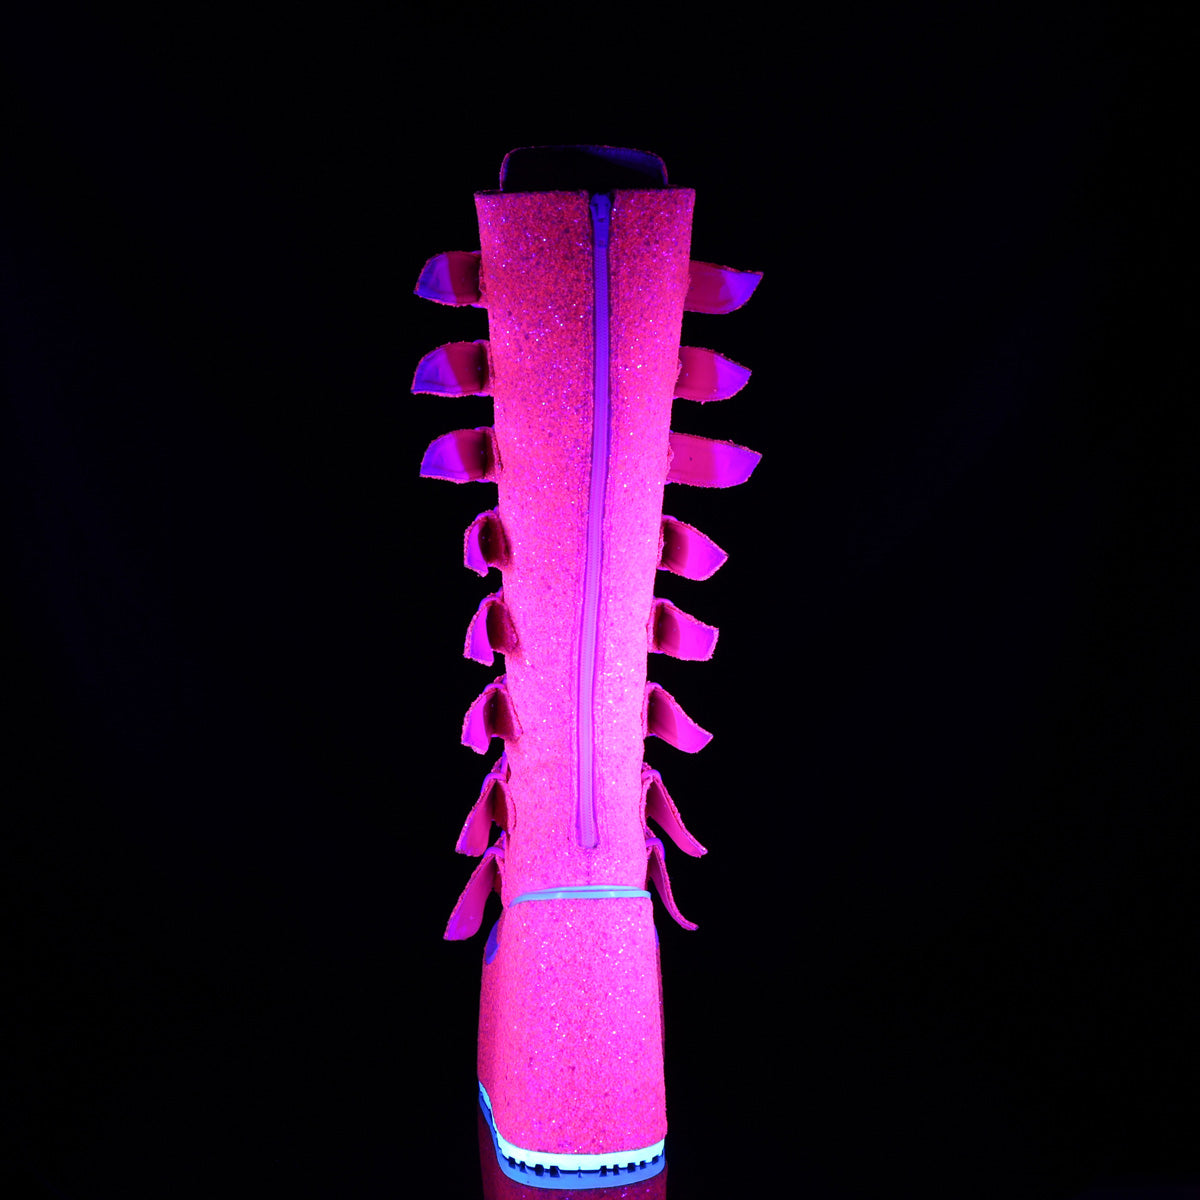 SWING-815UV Demonia Pink Glitter Women's Mid-Calf & Knee High Boots [Demonia Cult Alternative Footwear]